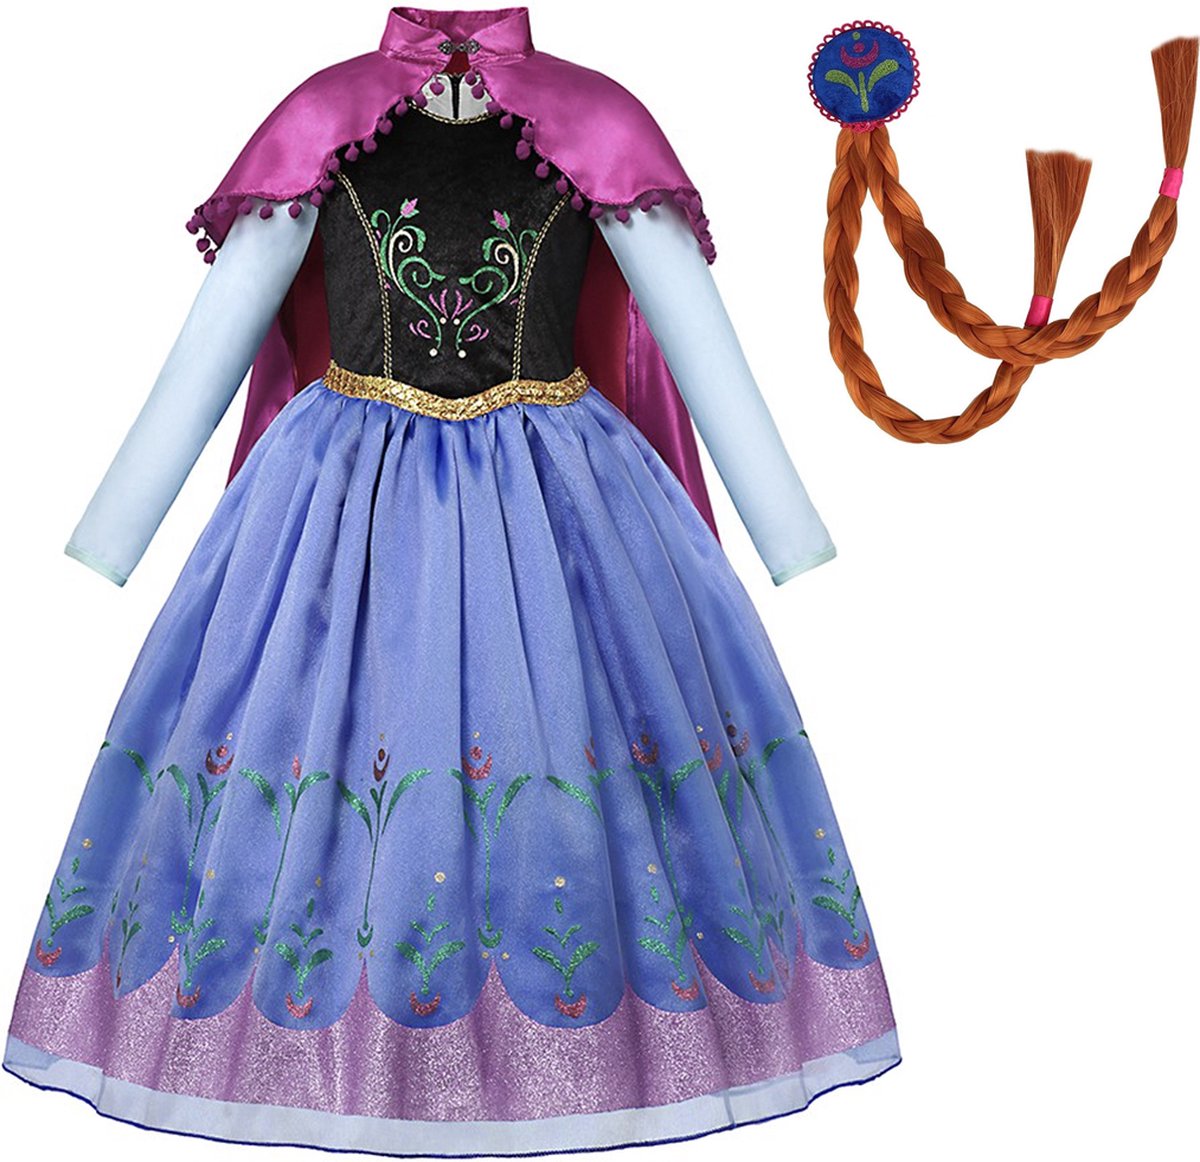 Prinsessenjurk meisje - Verkleedkleding meisje - Het Betere Merk - Lange roze cape - Haarvlecht - Maat 98/104 (110) - Carnavalskleding - Cadeau meisje - Verkleedkleren - Kleed